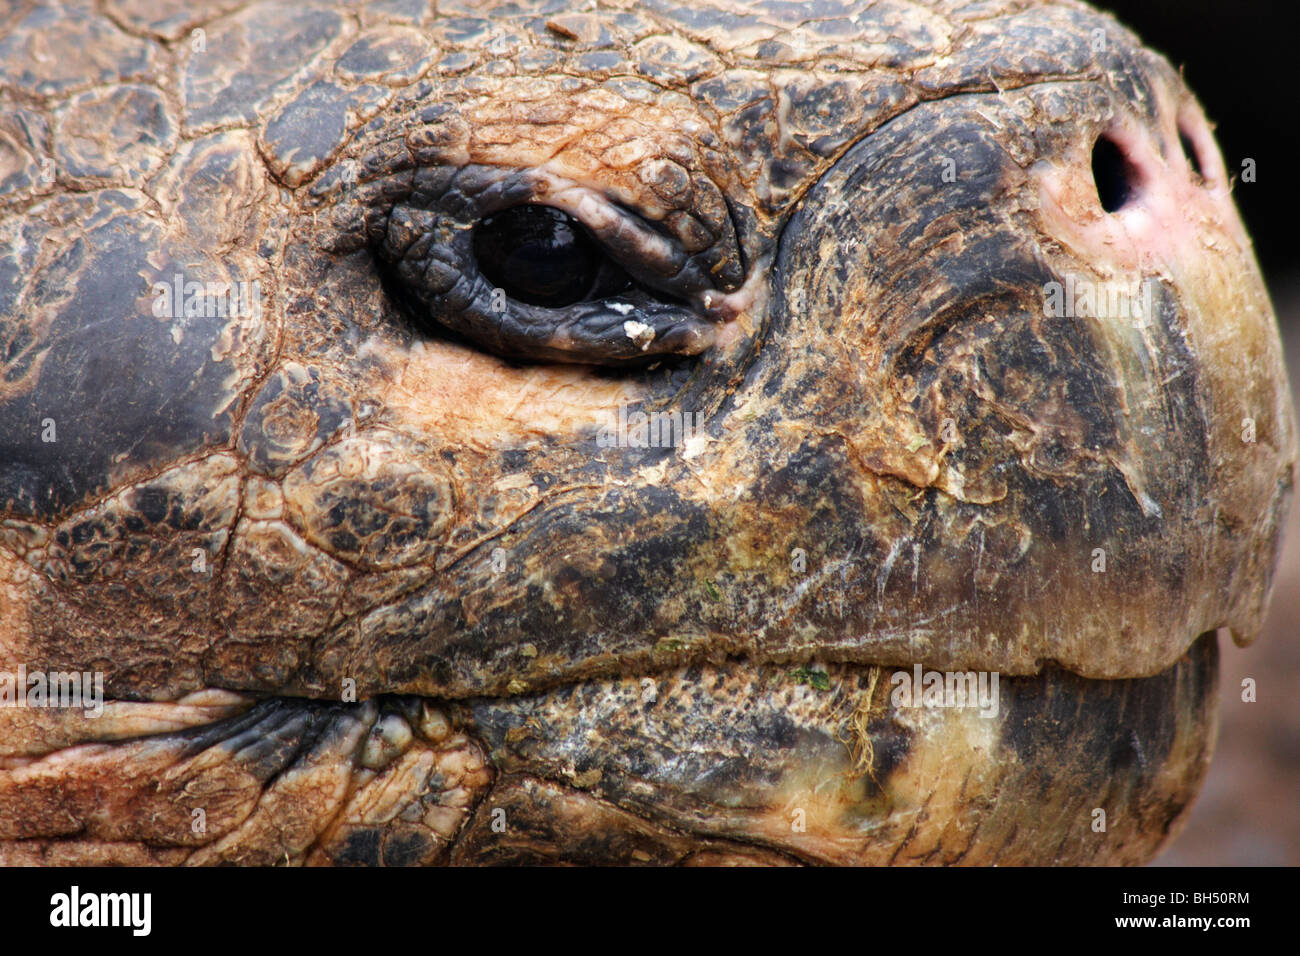 Les tortues géantes des Galapagos (Geochelone spp.) Banque D'Images